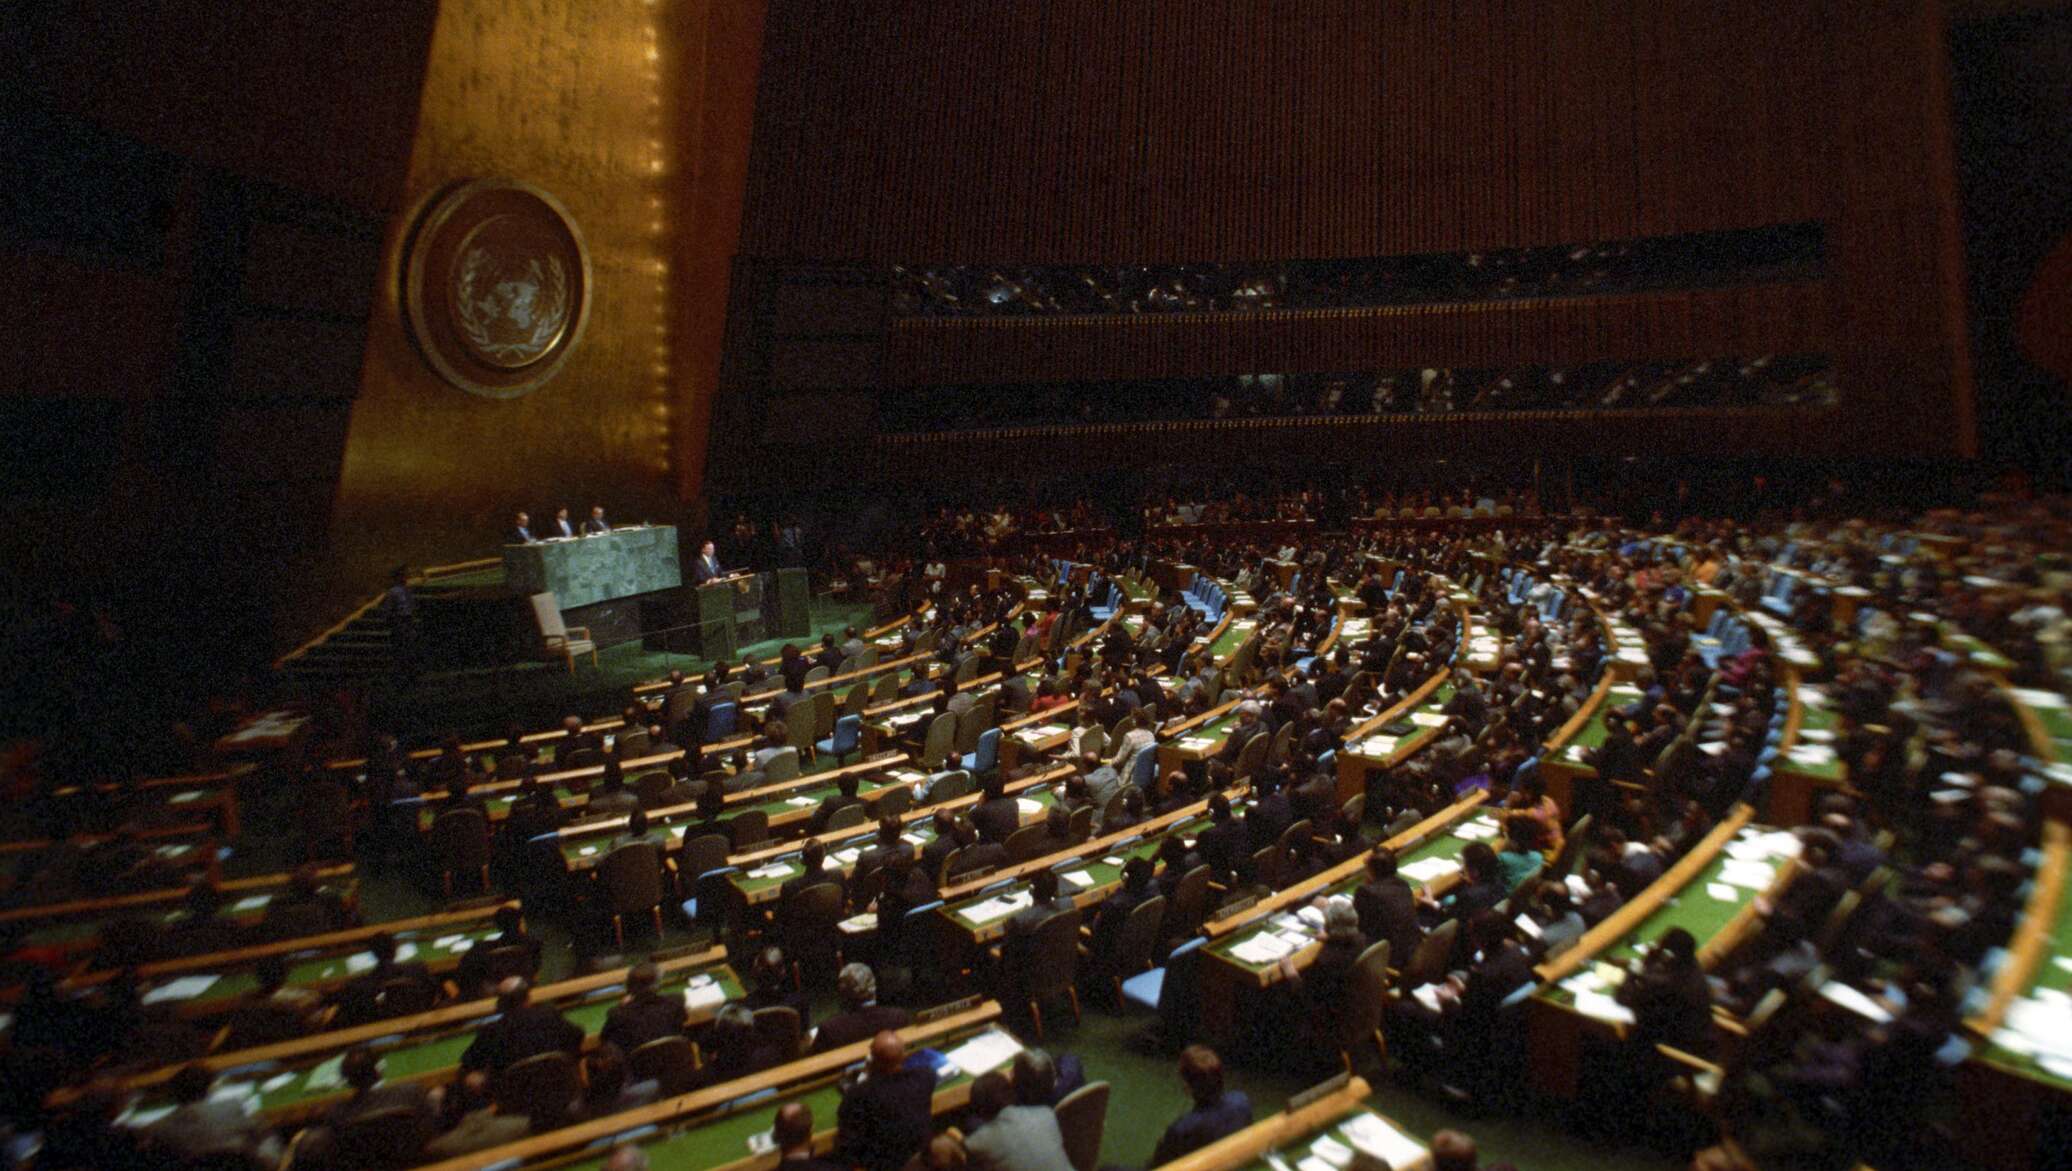 Ассамблея оон резолюции. Генеральная Ассамблея ООН 1995. Генеральная Ассамблея ООН 1959. Генеральная Ассамблея ООН 1974. Заседание ООН 1992.